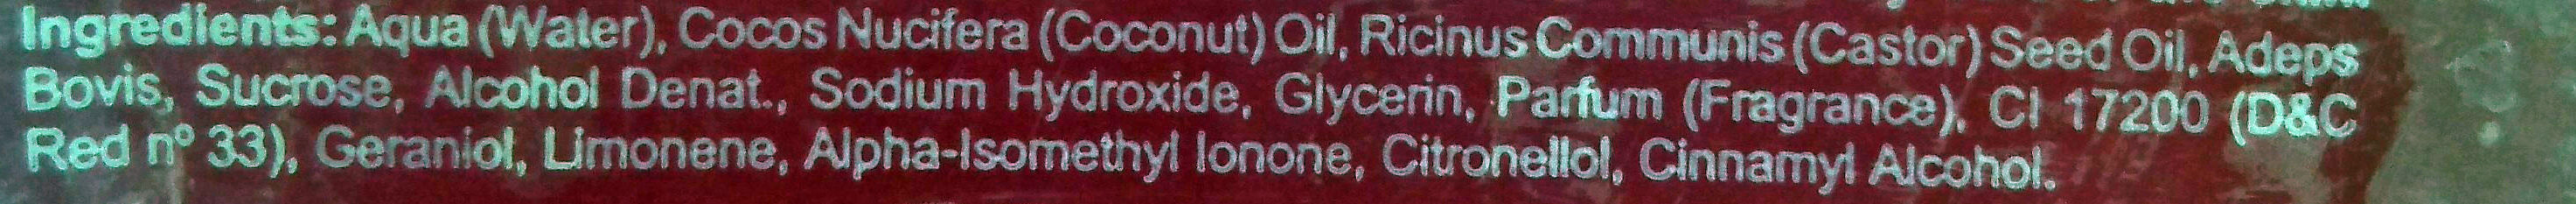 Glicerina natural rubi - Ingredients - en